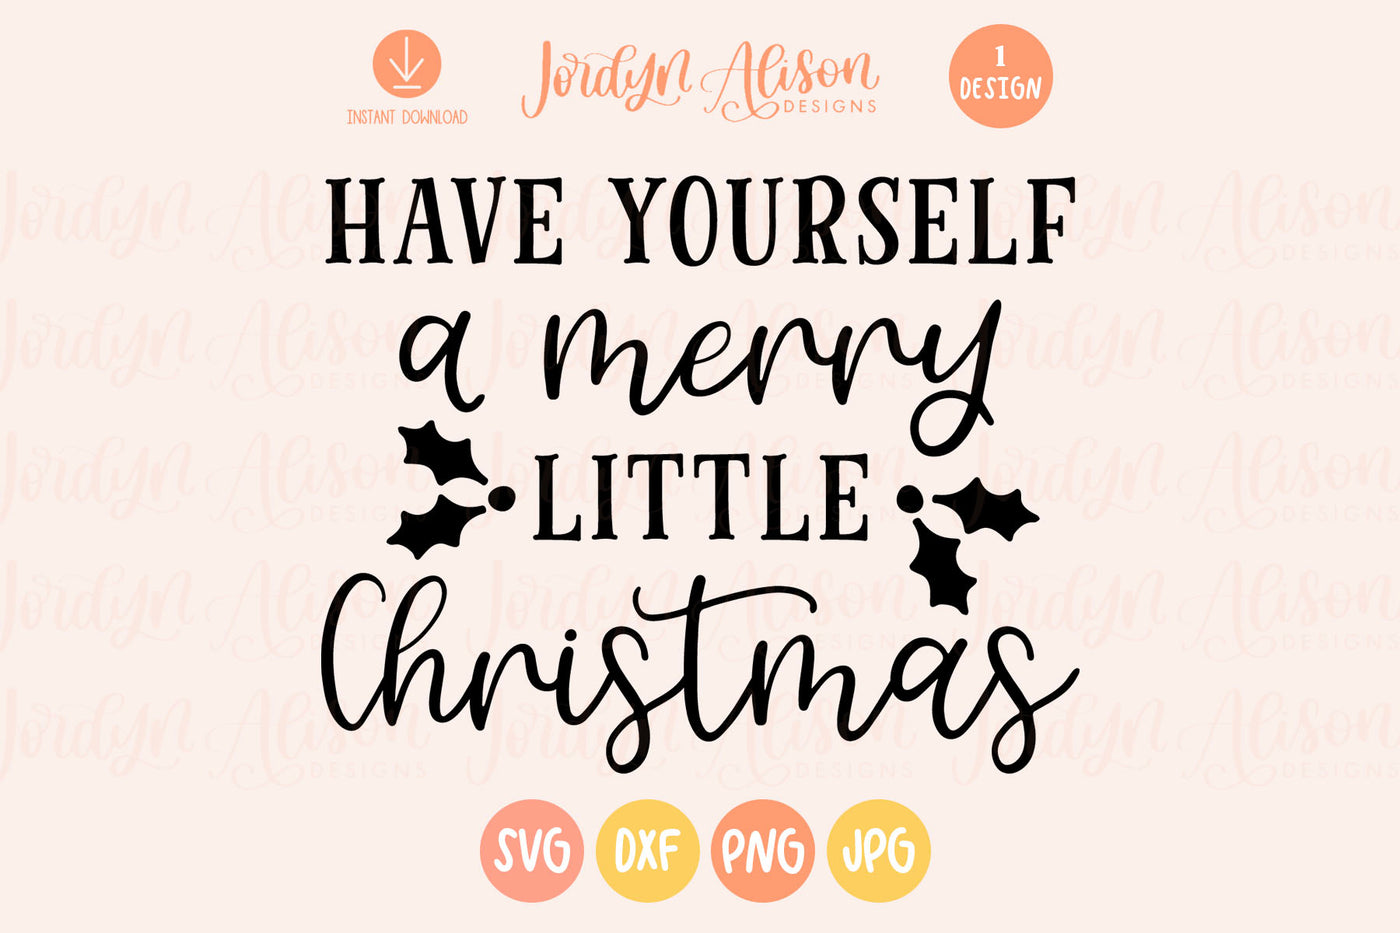 Merry Little Christmas SVG